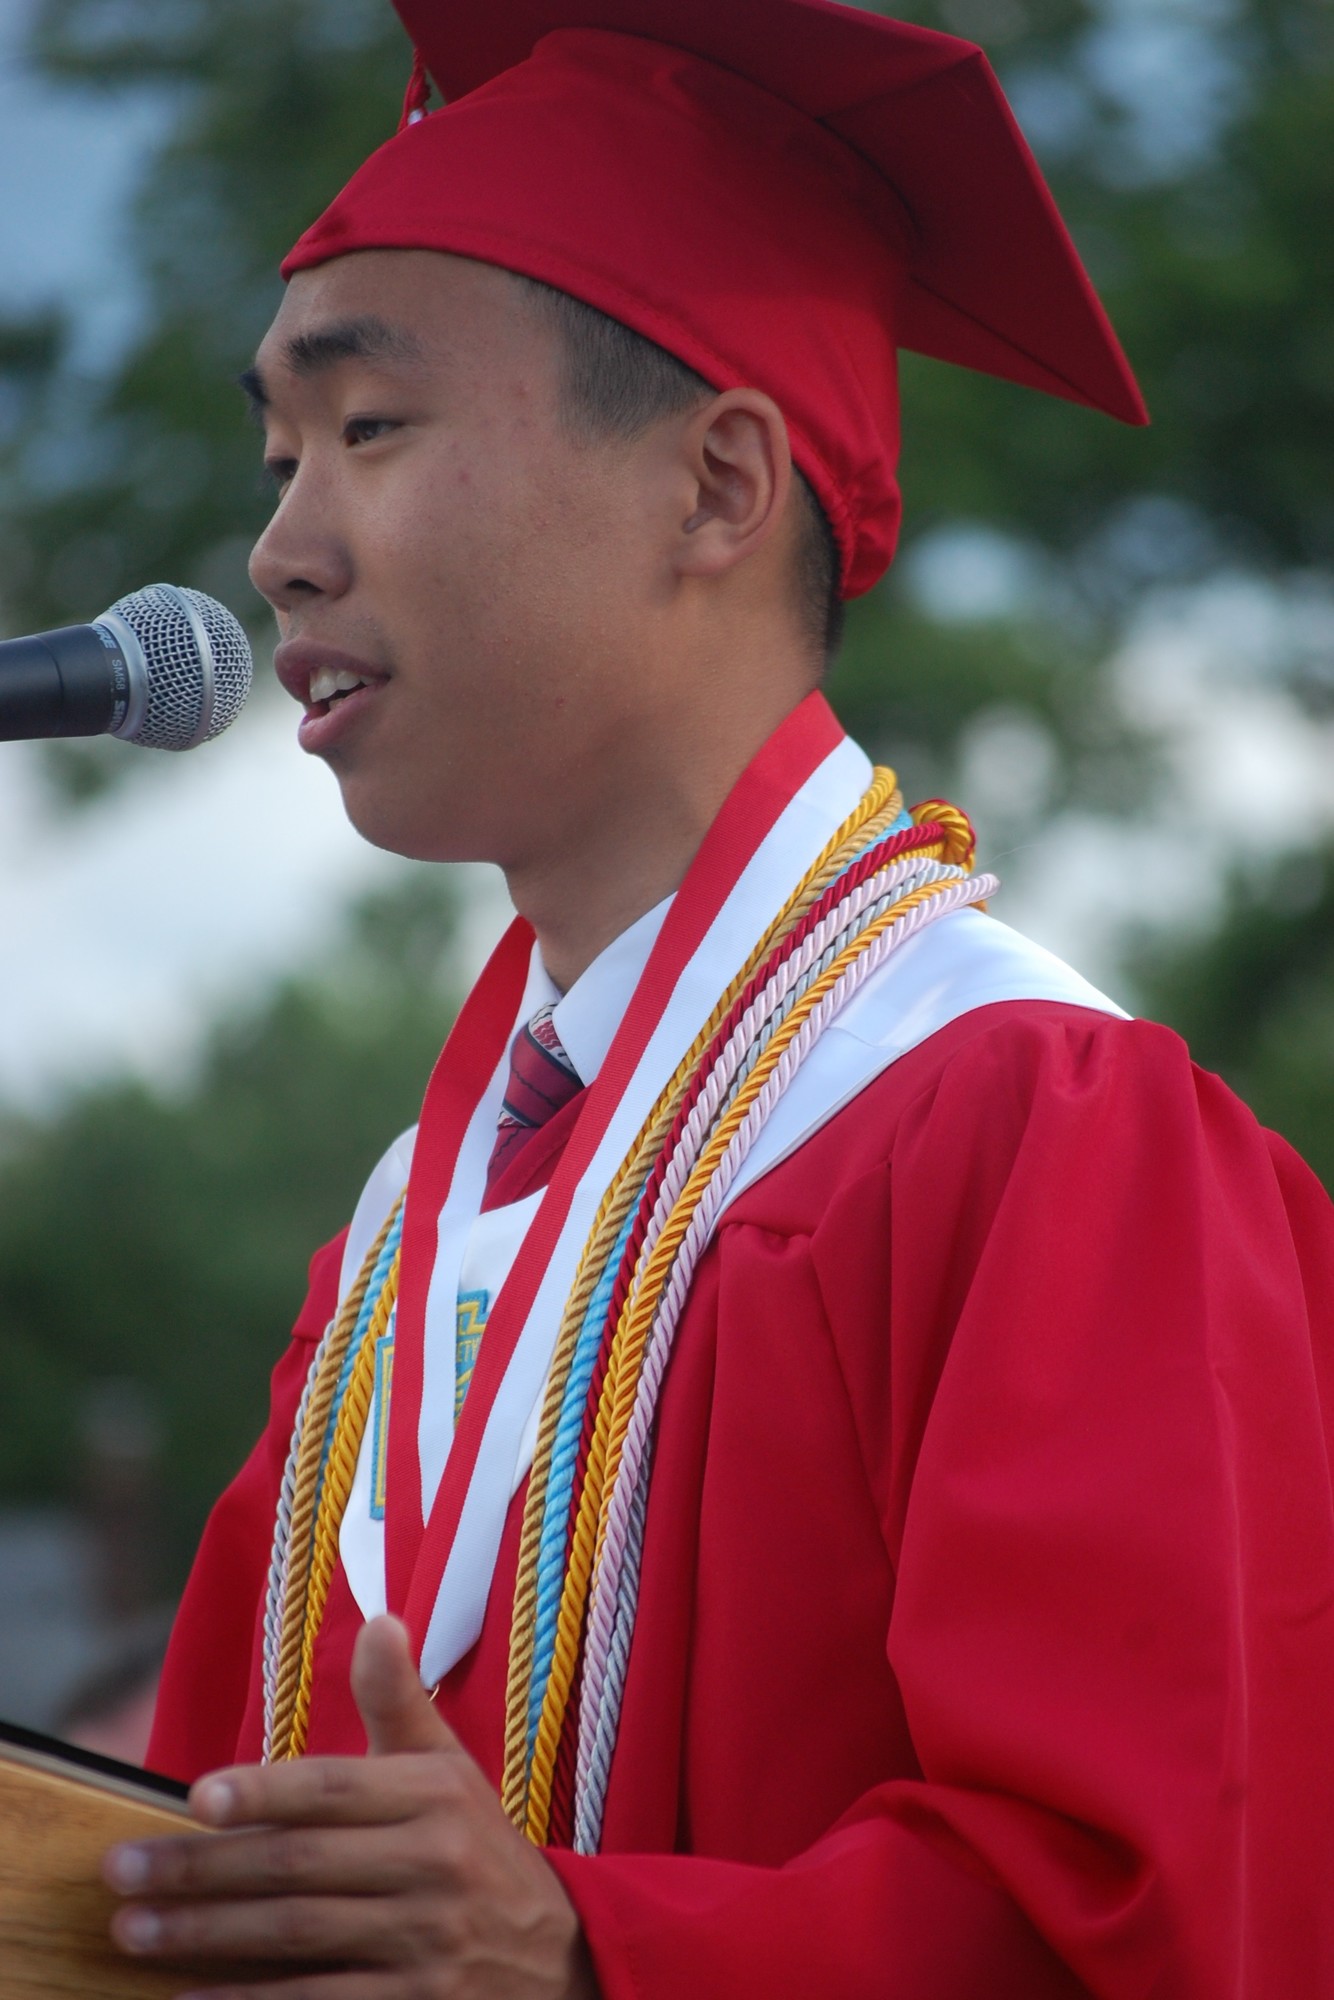 Valedictorian Kevin Li had words of inspiration for his fellow graduates.